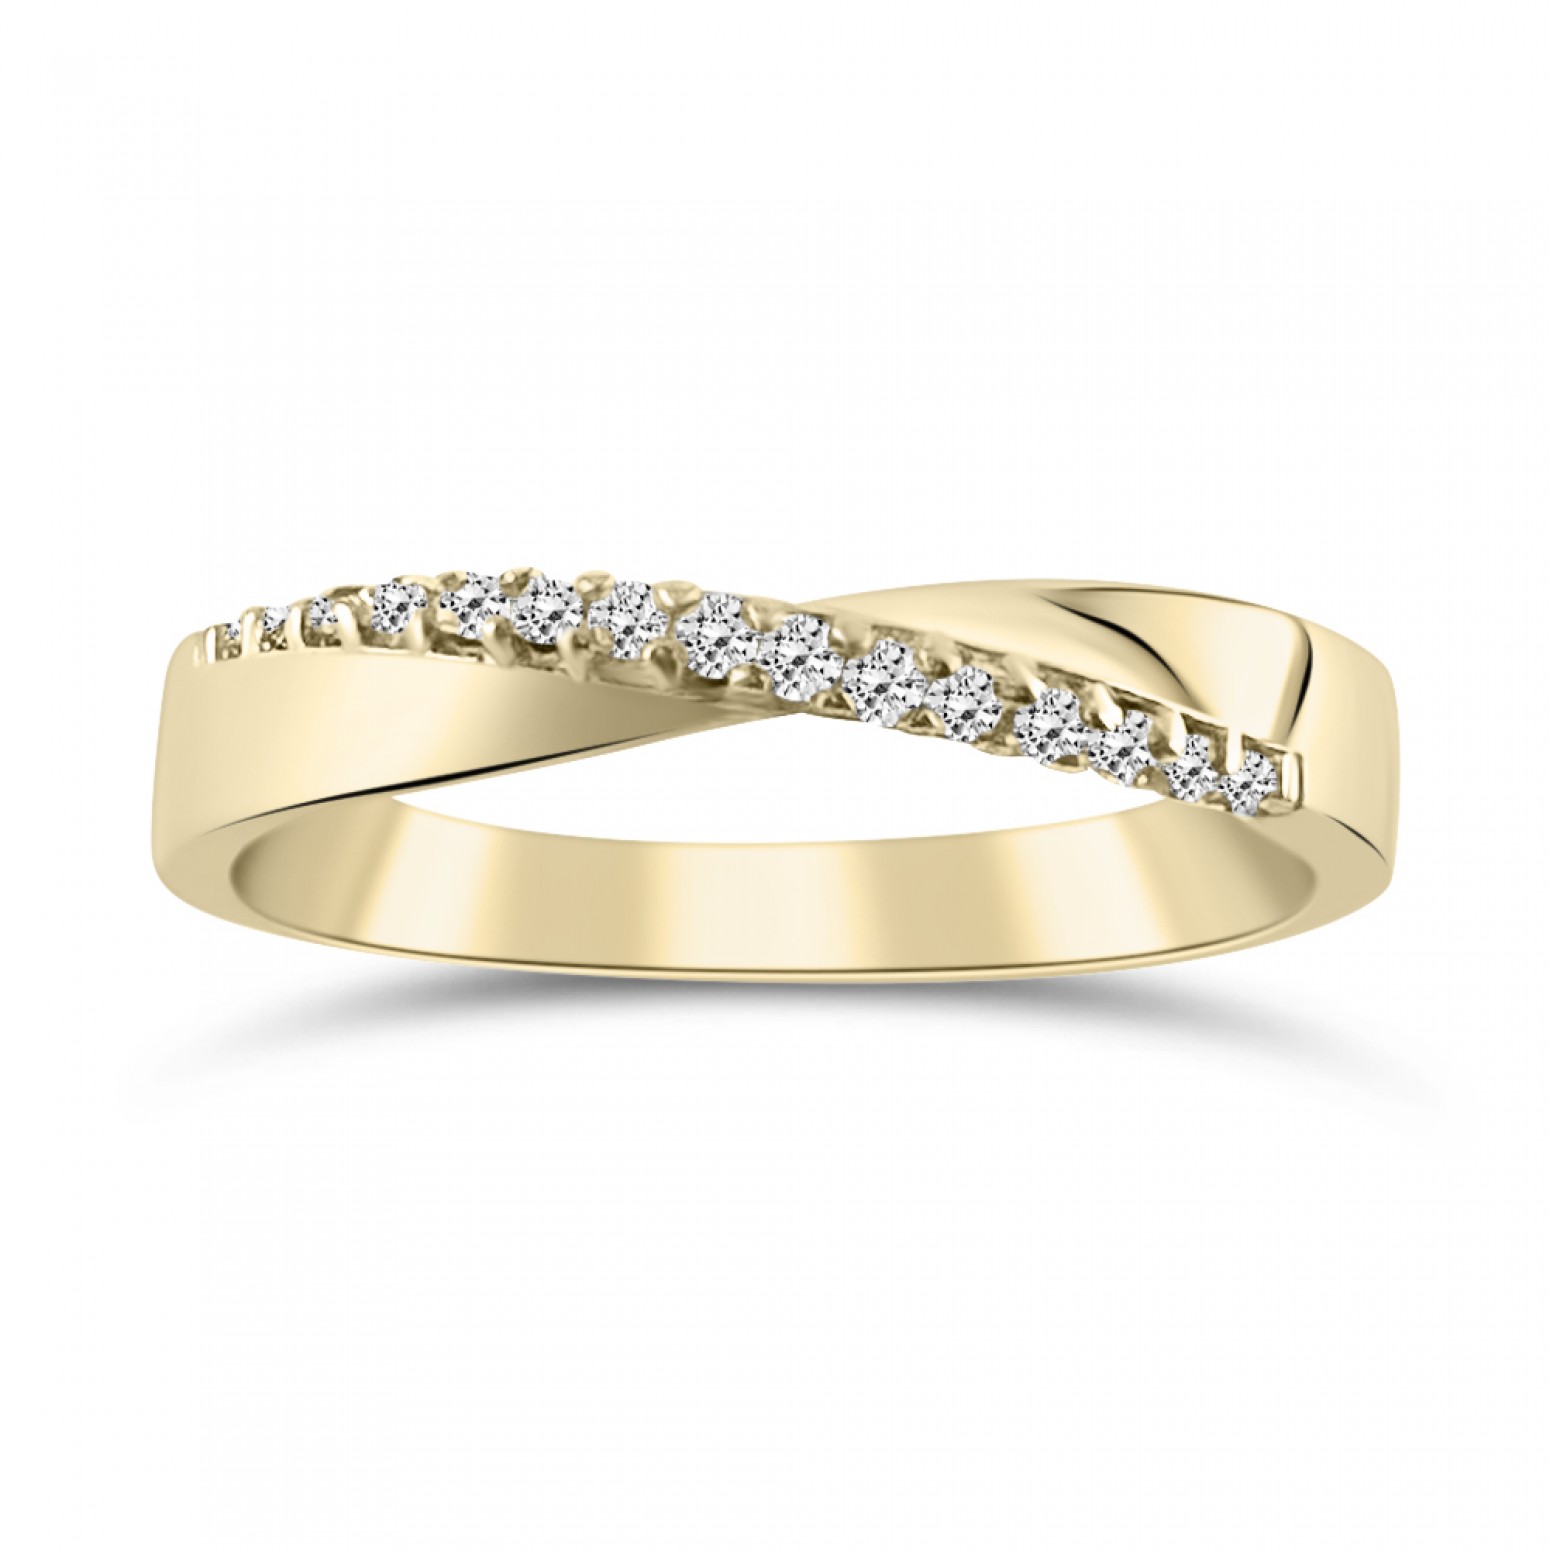 Multistone ring K14 gold with zircon, da4265 RINGS Κοσμηματα - chrilia.gr